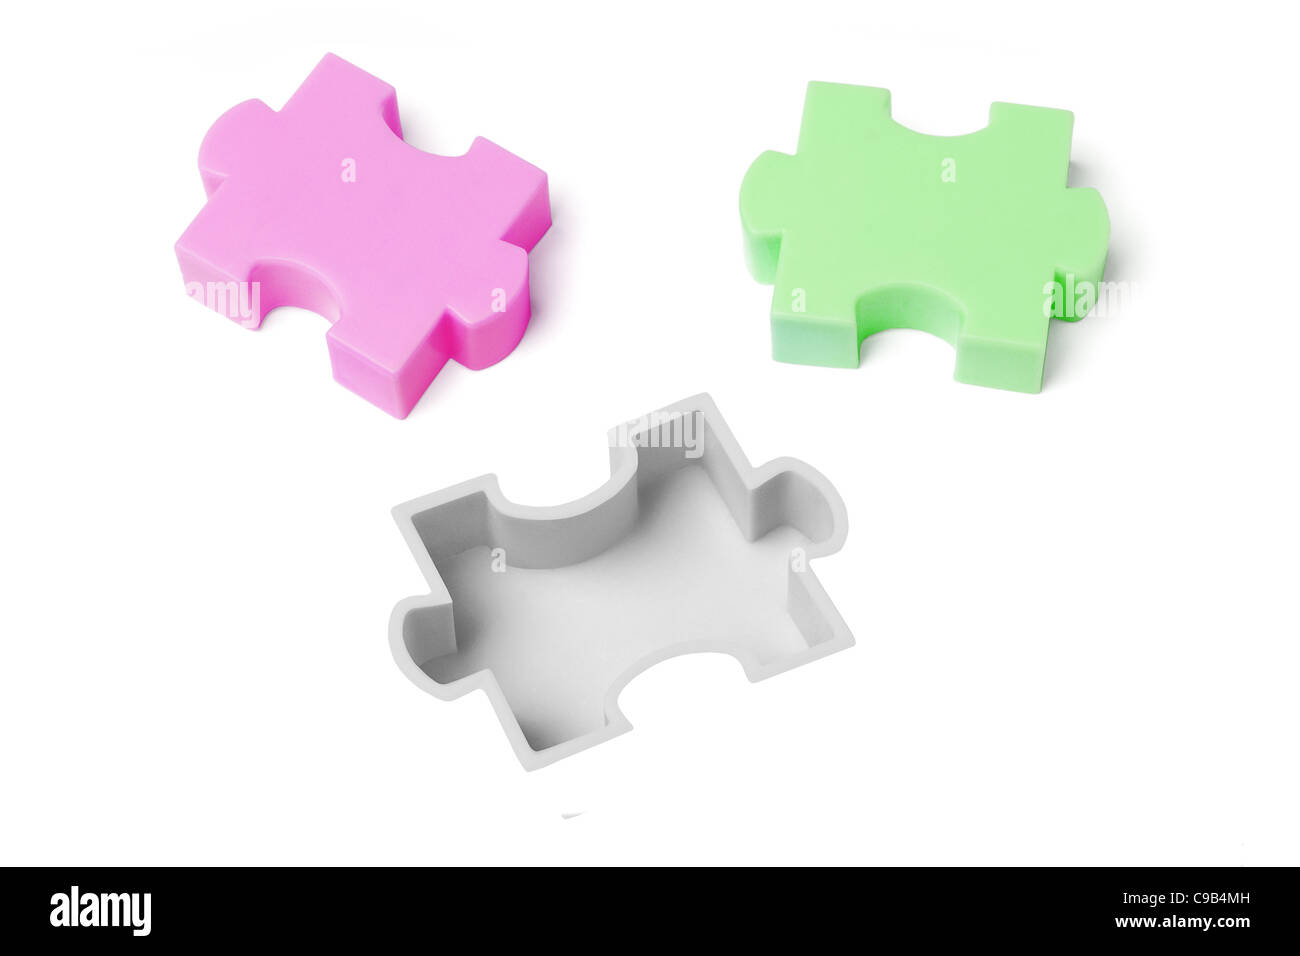 Plastic jigsaw puzzles on white background Stock Photo